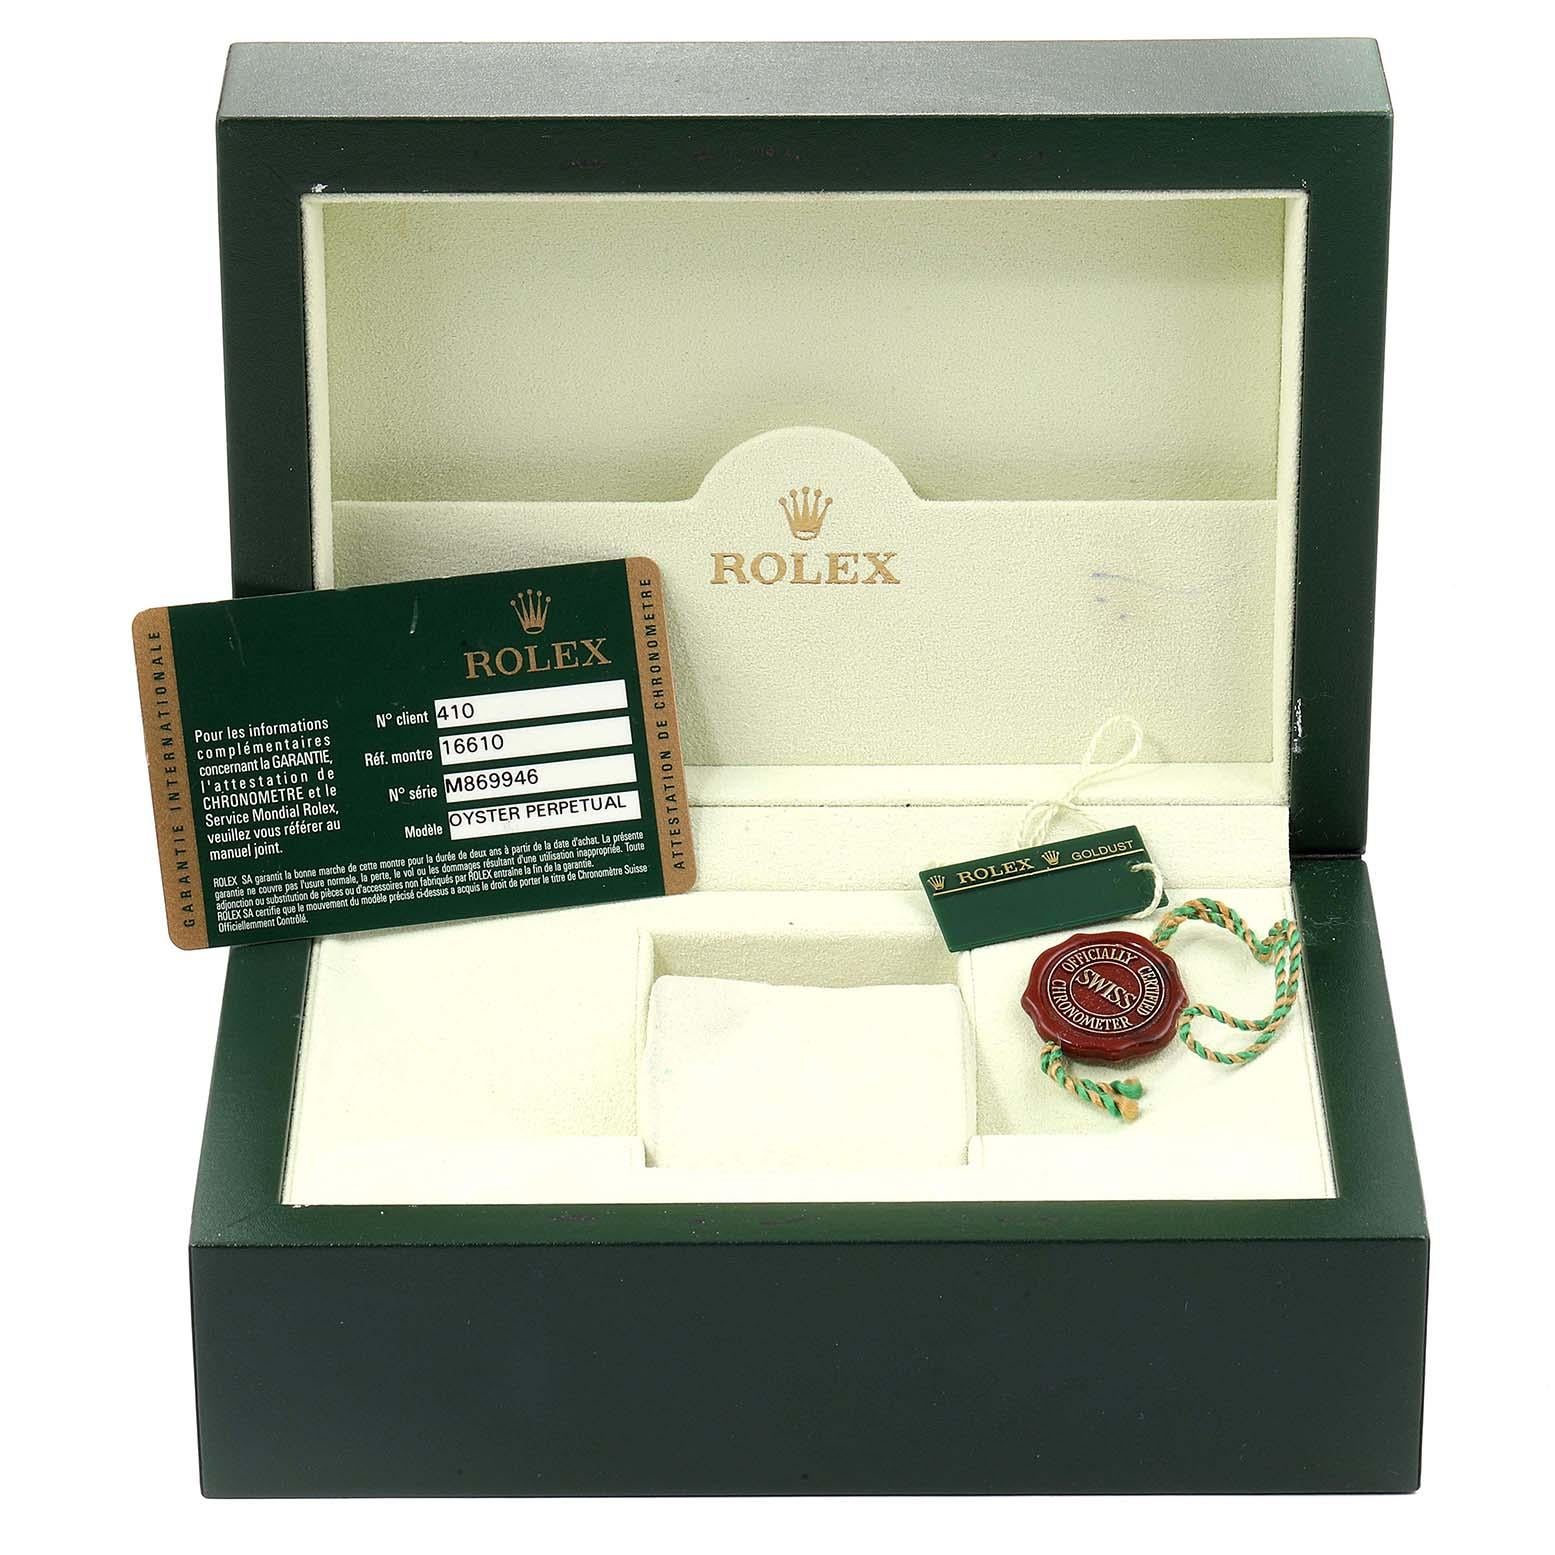 Rolex Submariner Date Stainless Steel Men's Watch 16610 Box Card 8